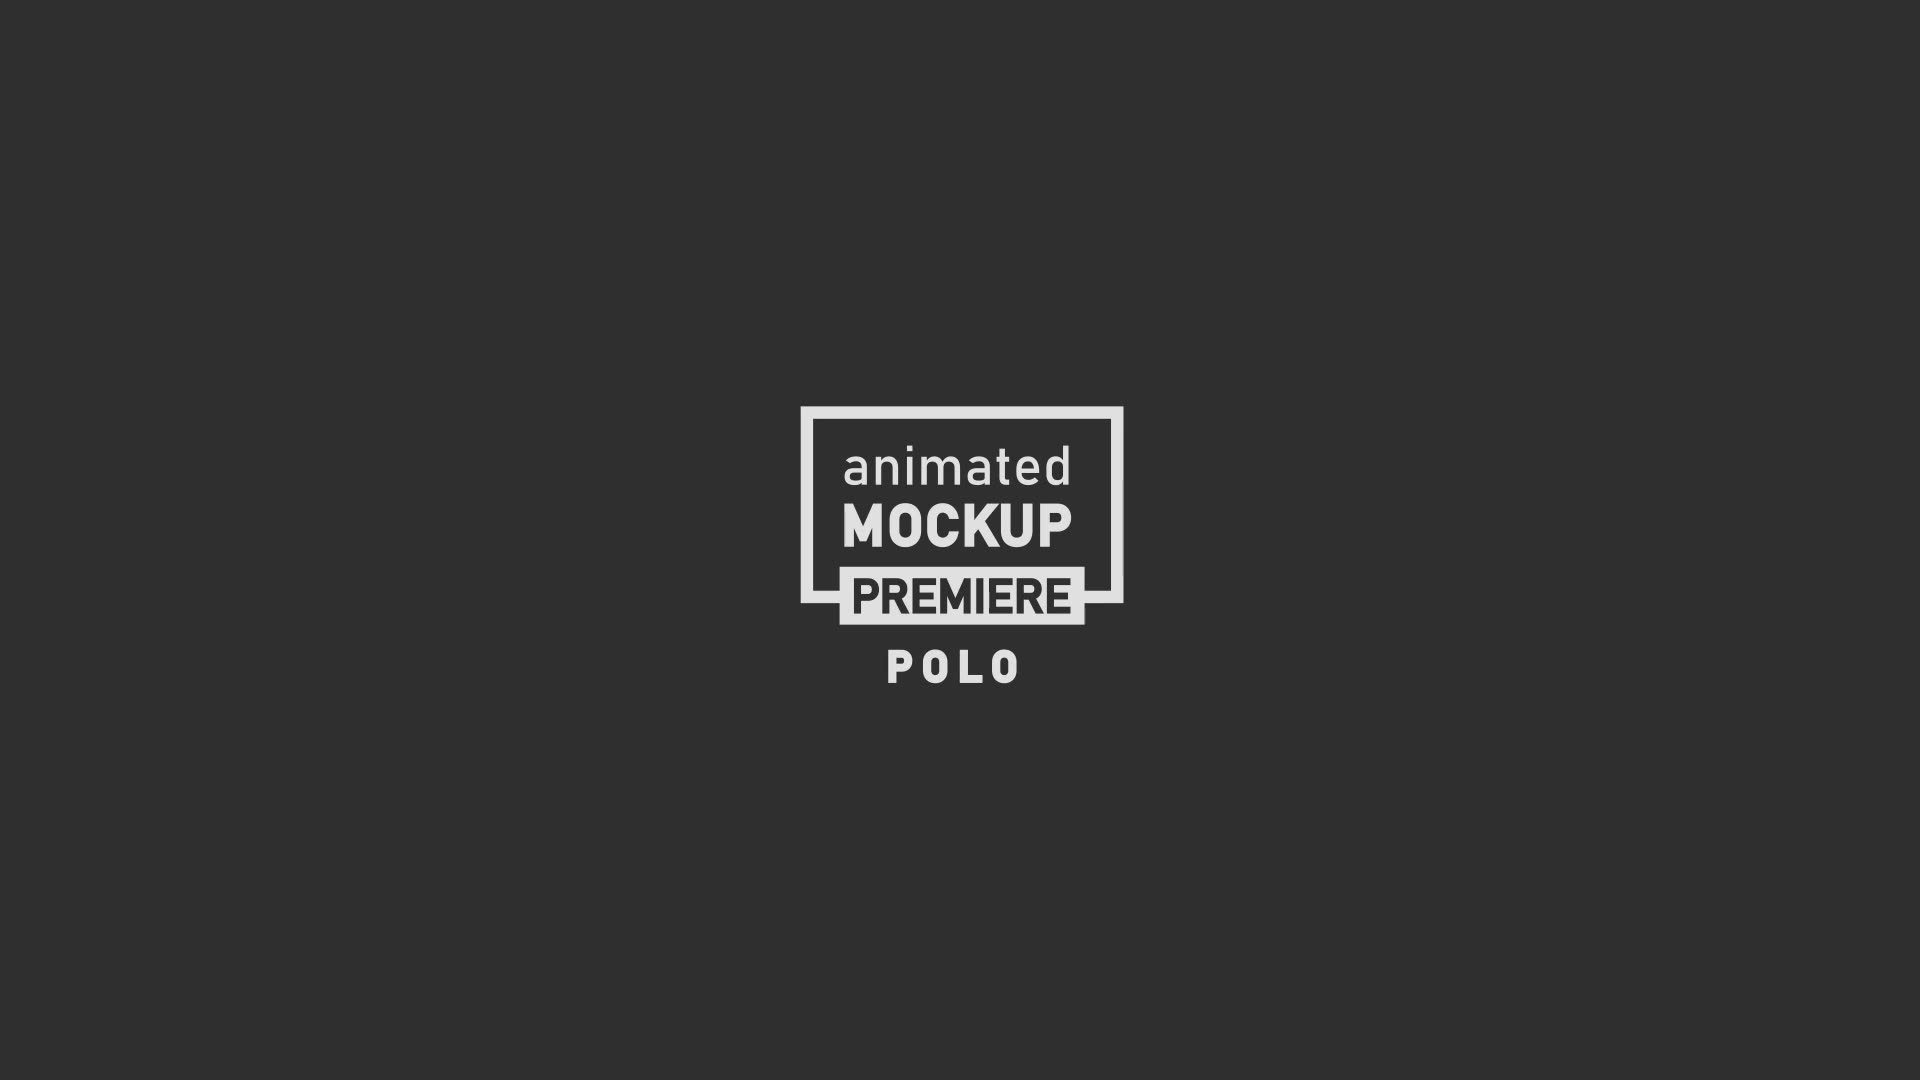 Polo T shirt 5 Scenes Mockup Template Animated Mockup PREMIERE Videohive 33877905 Premiere Pro Image 13